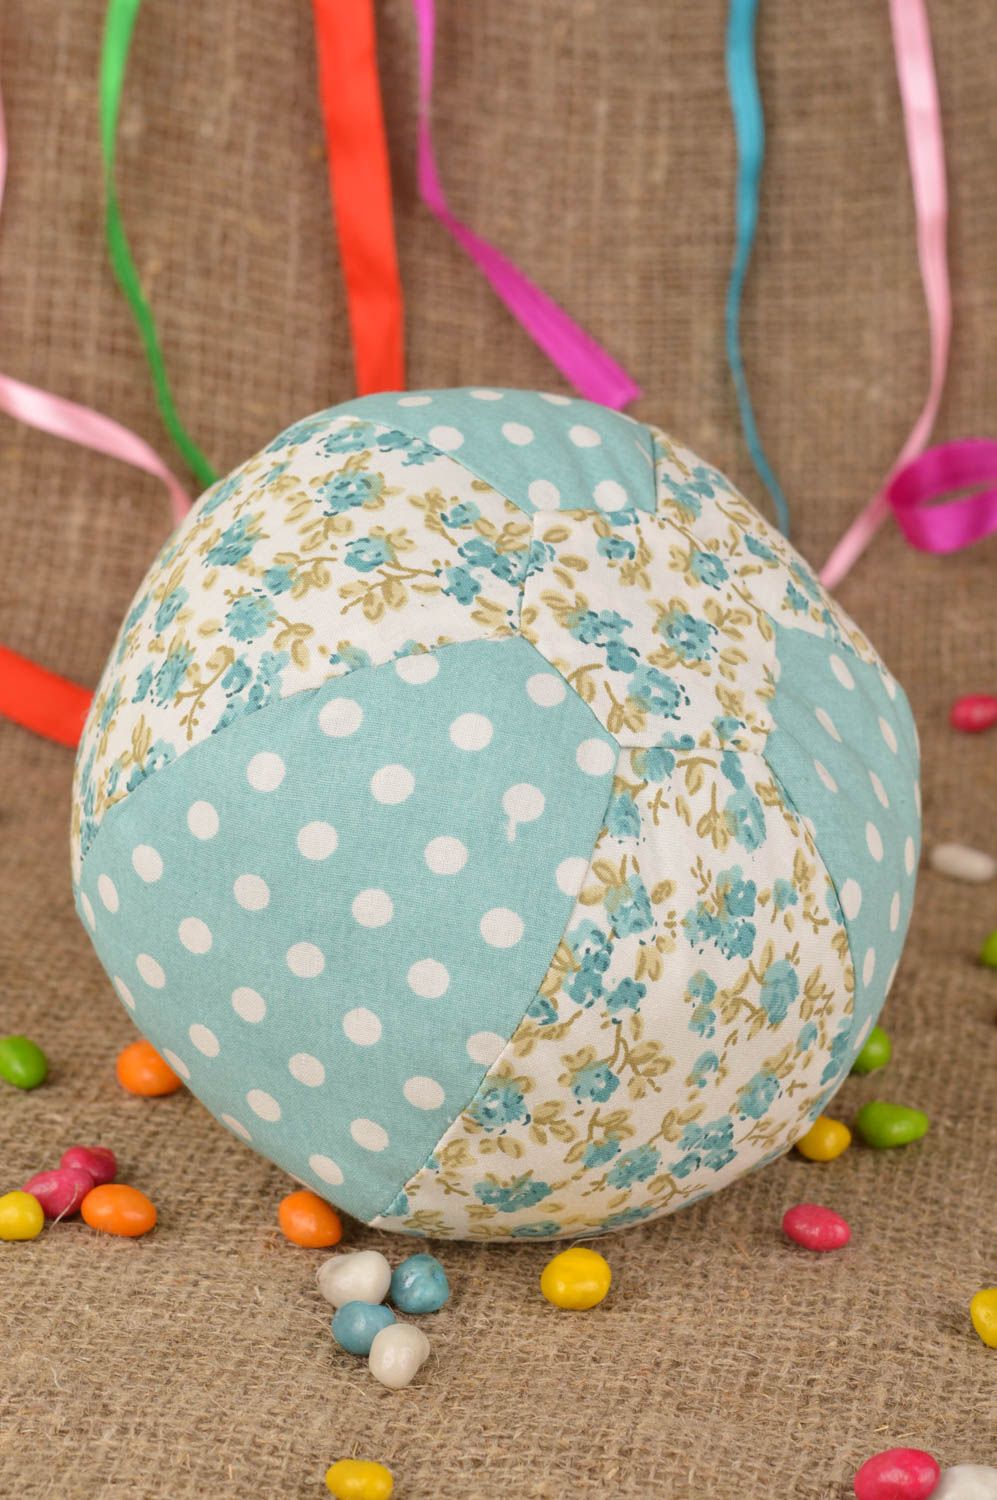 Blue soft handmade fabric toy ball for children handmade nursery decor ideas photo 1